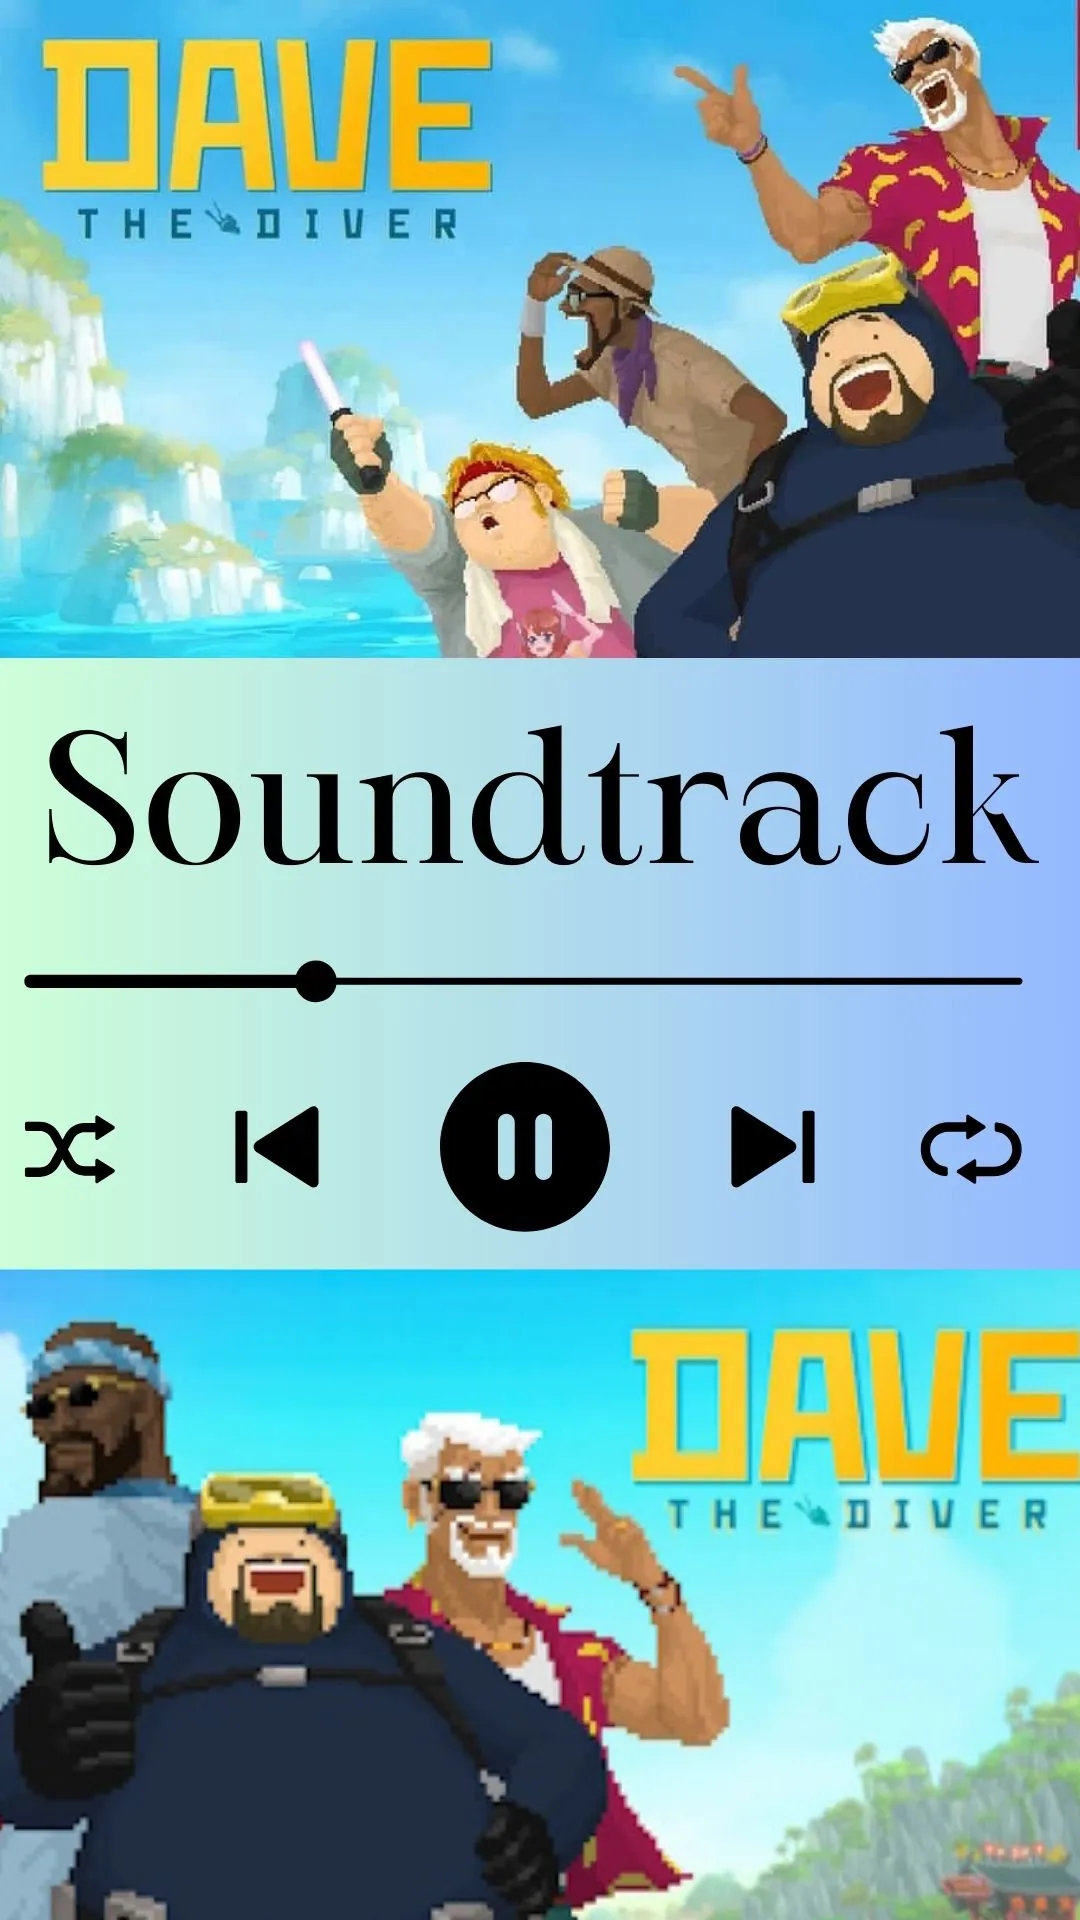 Dave The Diver Soundtrack